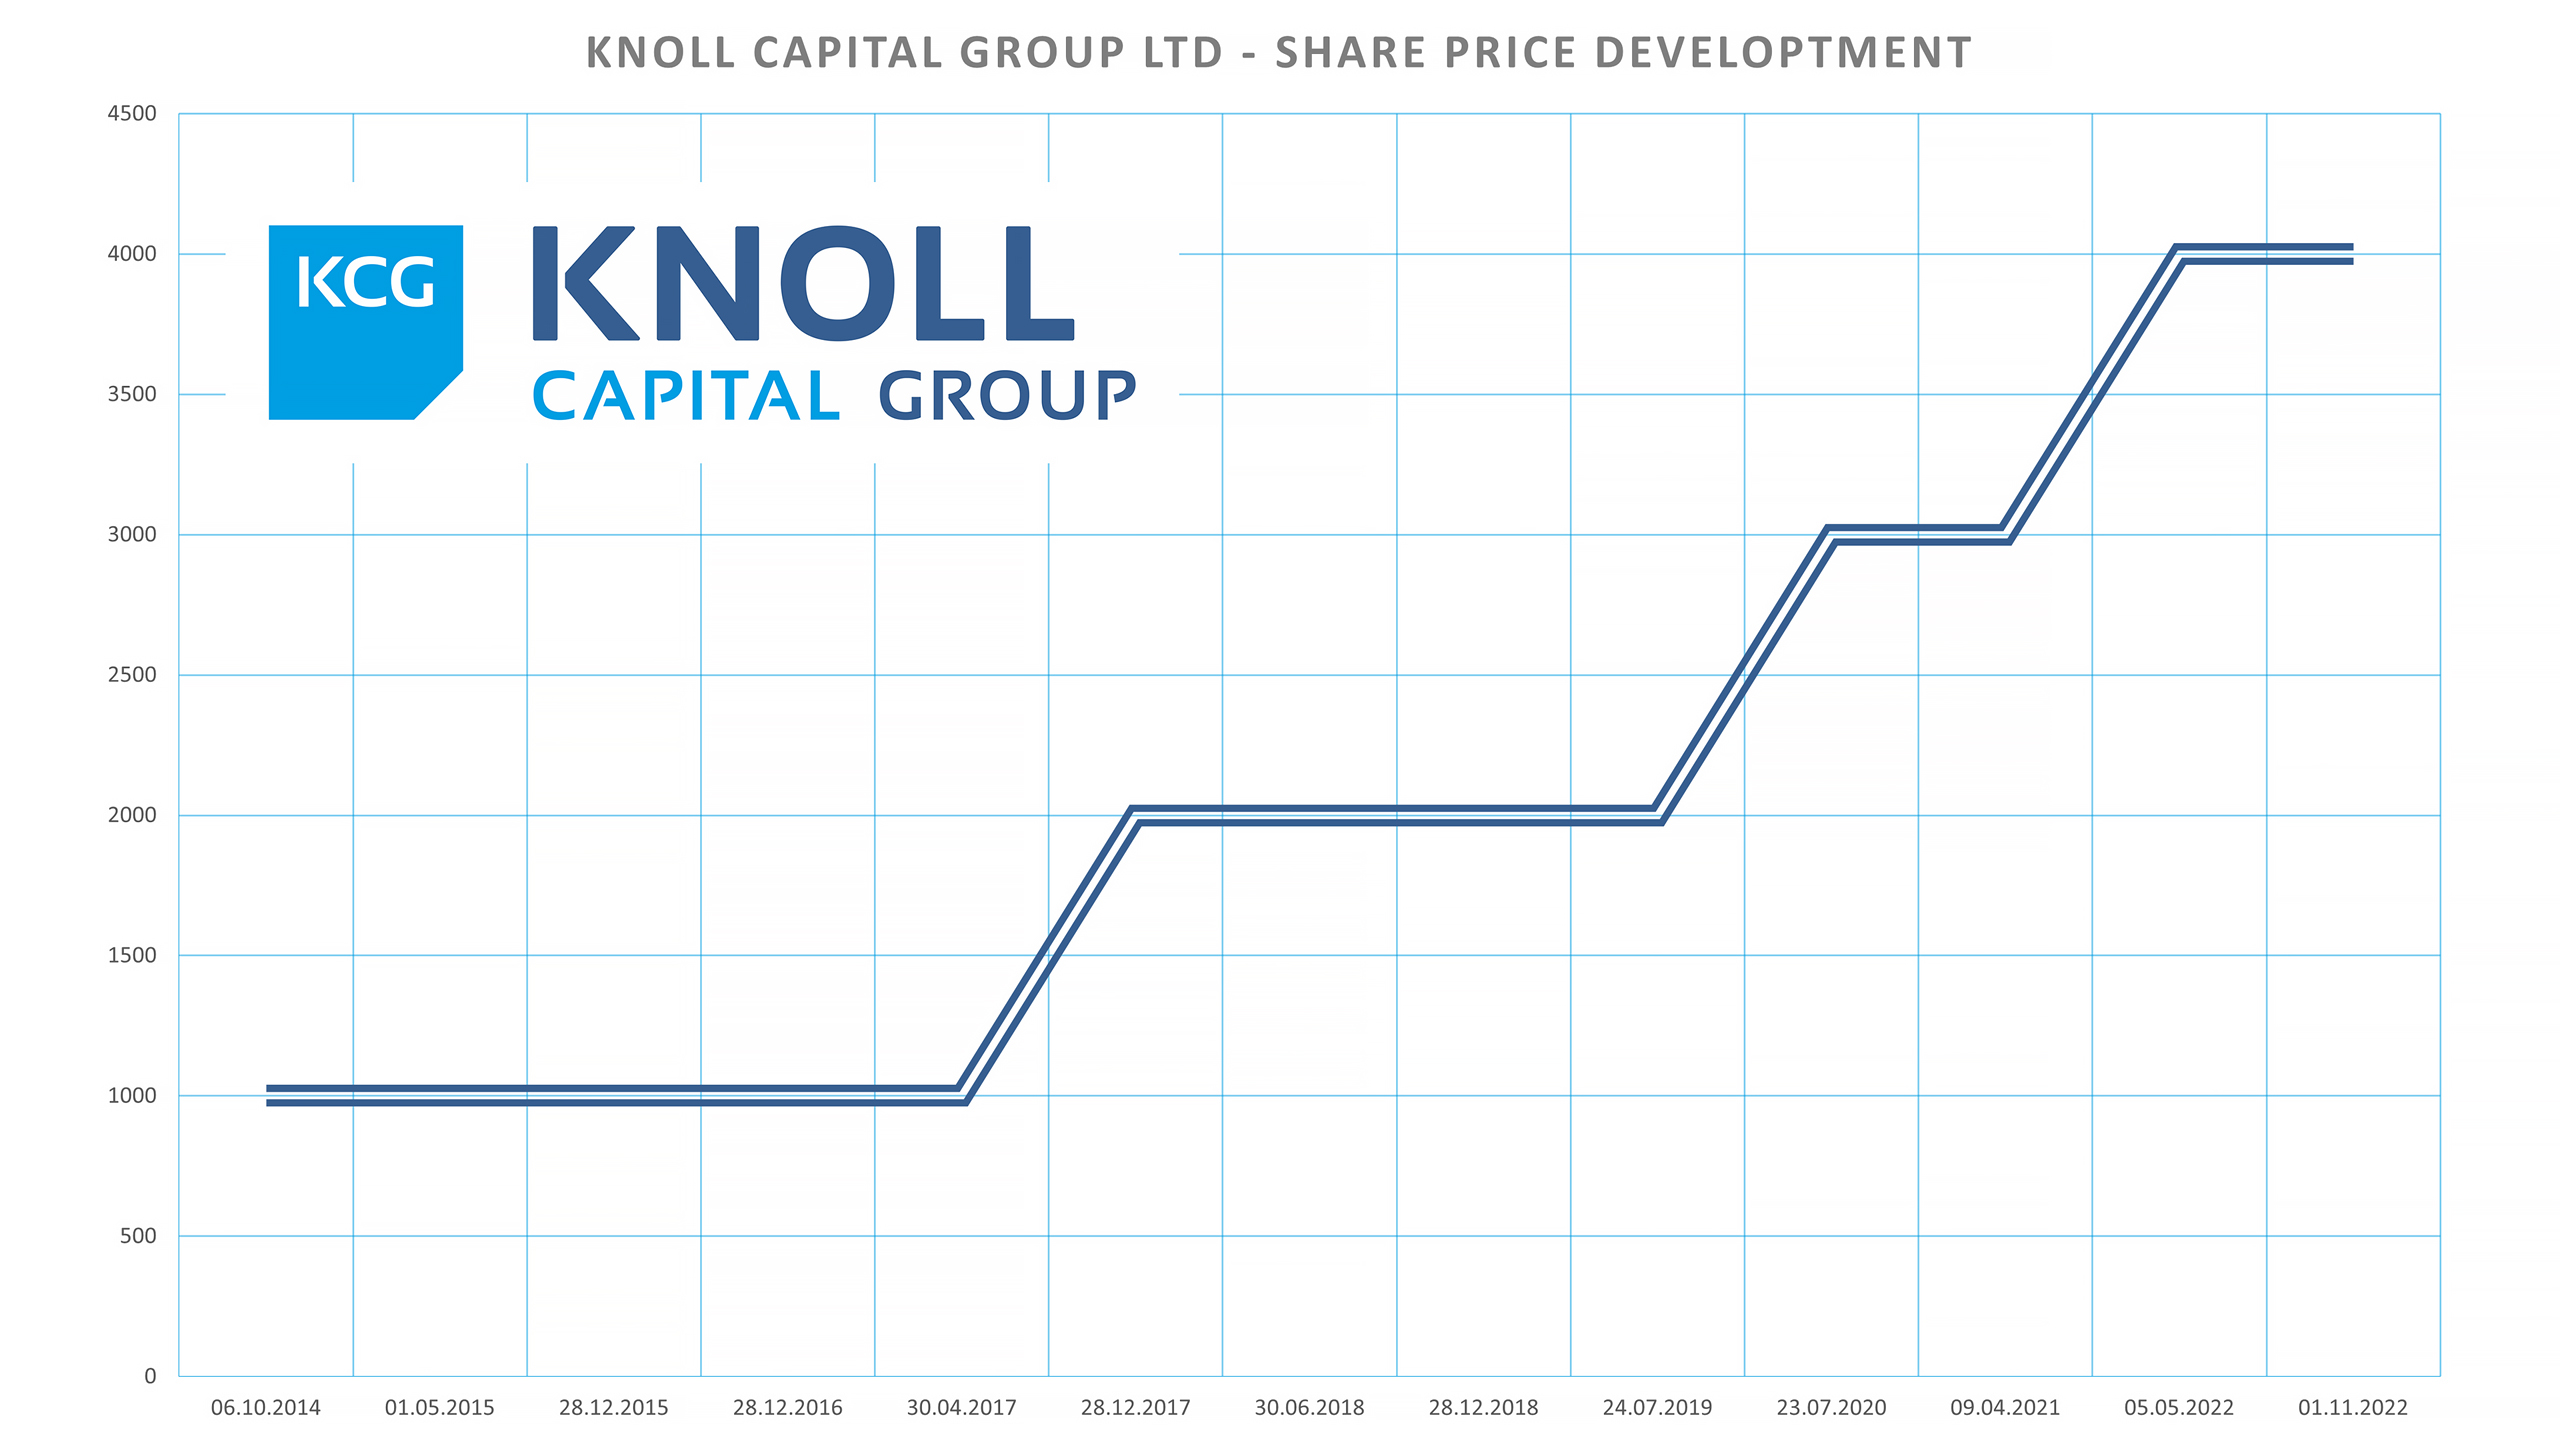 KNOLL Capital Group Ltd. Share Price Development until 31.12.2022